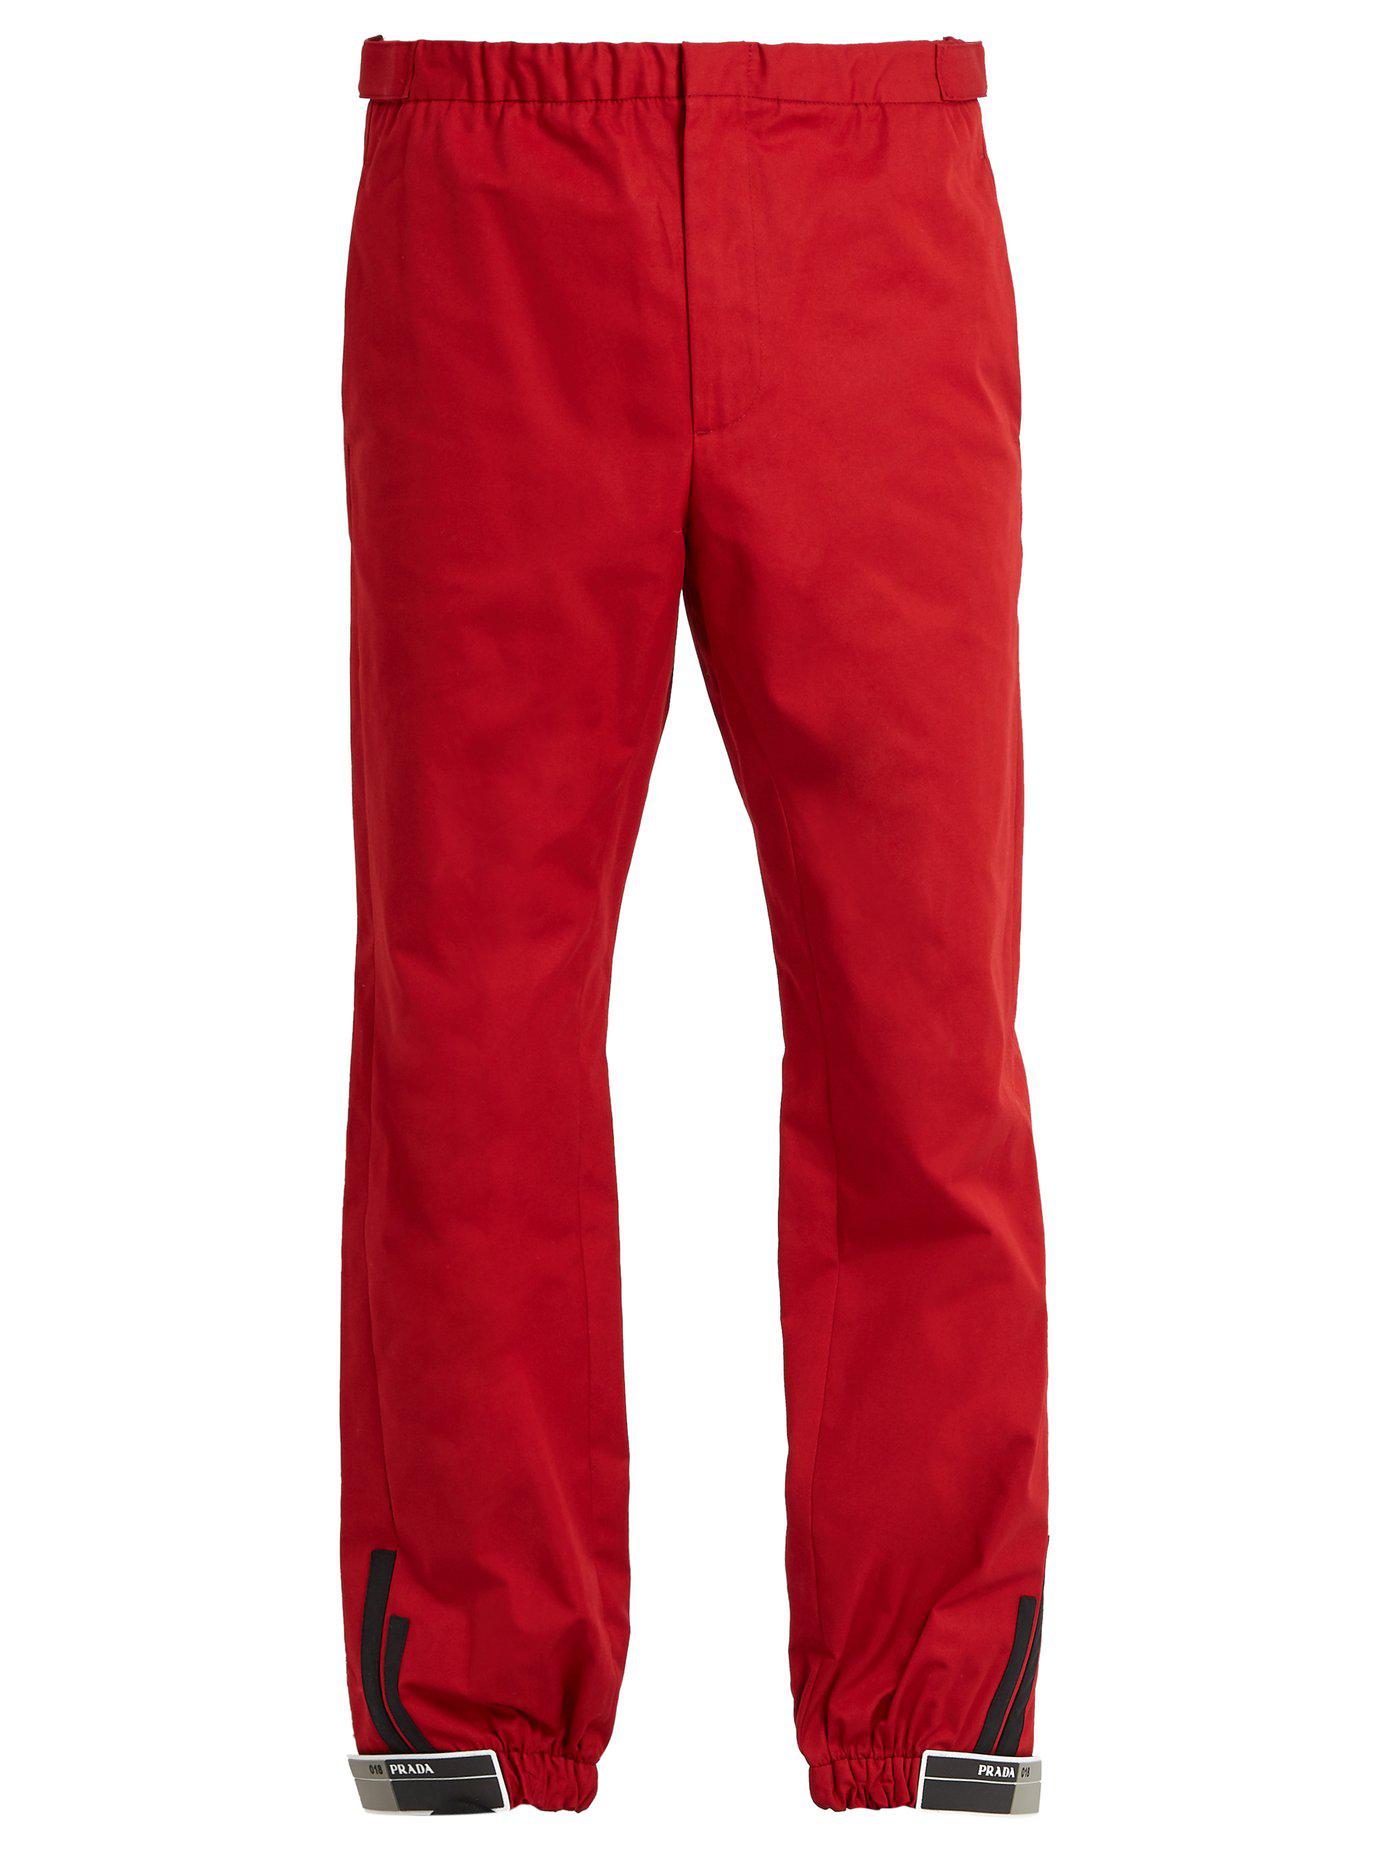 Prada Cotton Slim-leg Velcro-cuff Track Pants in Red for Men - Lyst